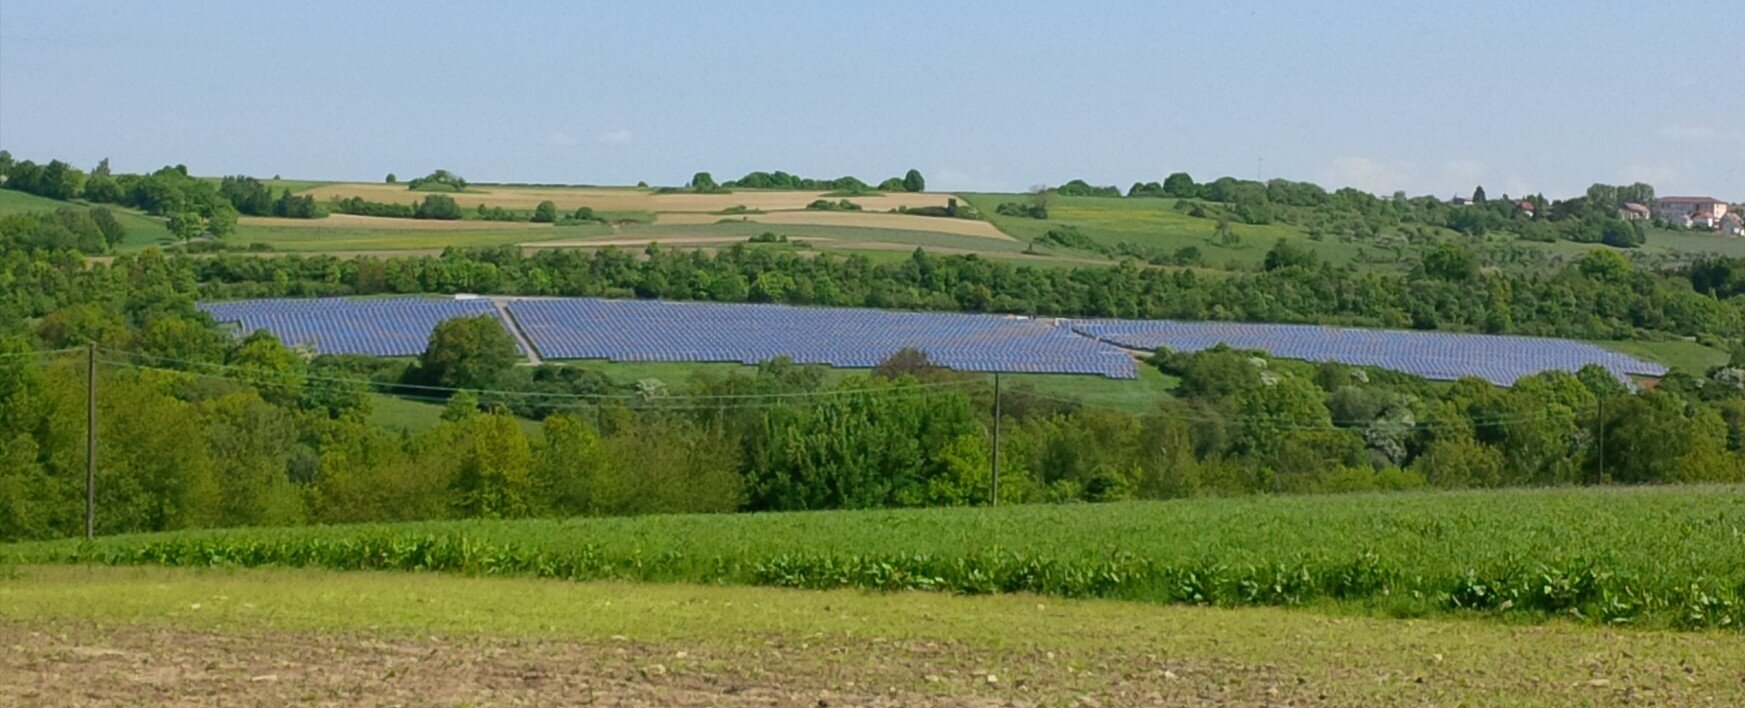 Solarpark - Freiflächen Photovoltaik 5 - Solarpark in Landschaft